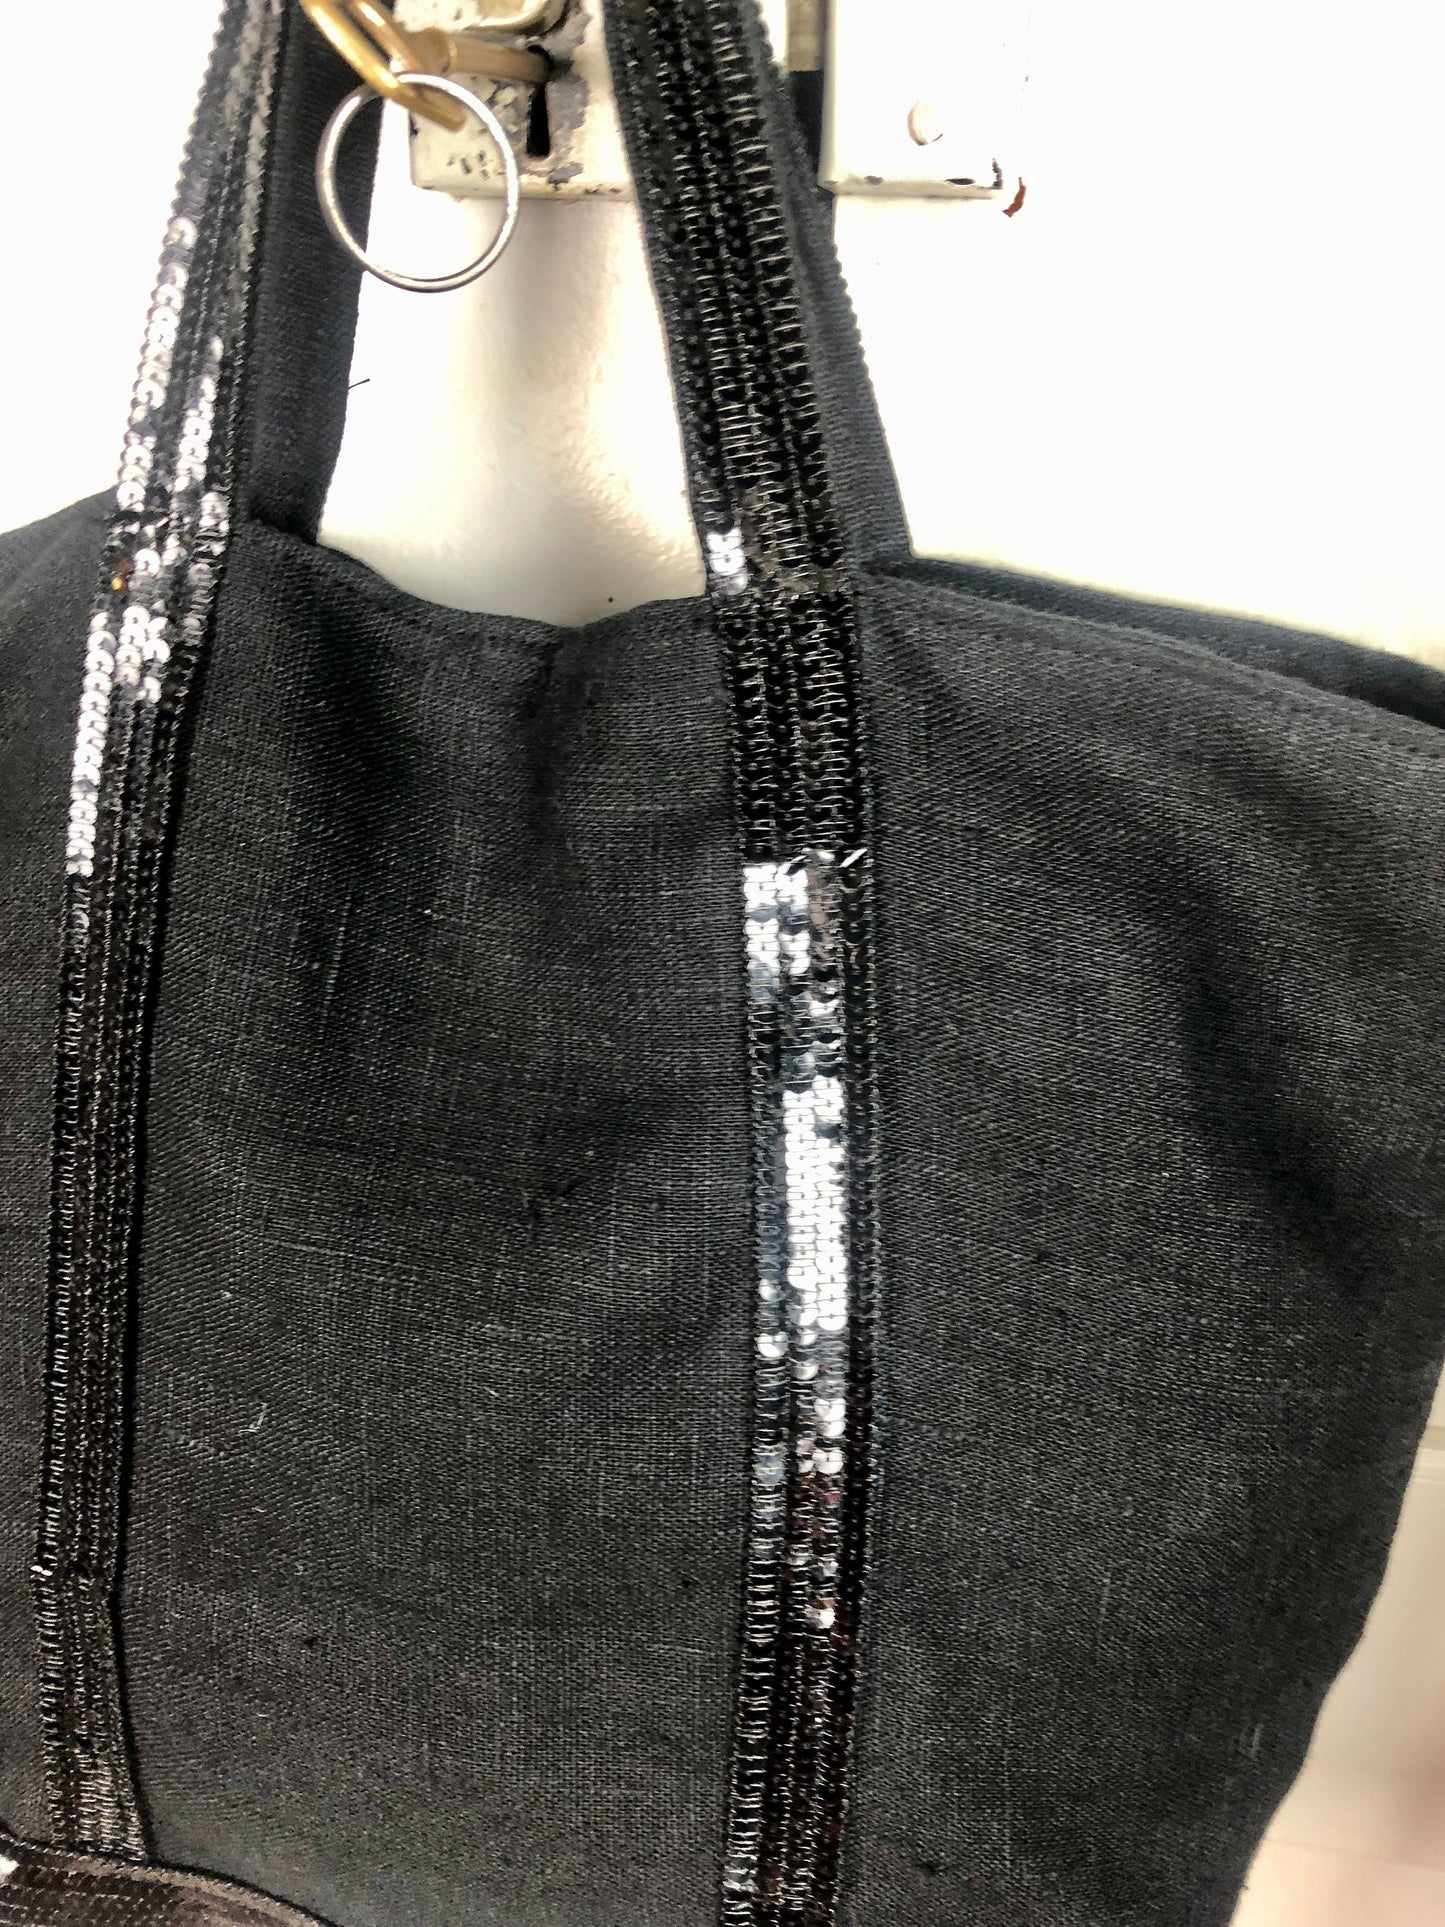 Black linen tote bag with black sequins